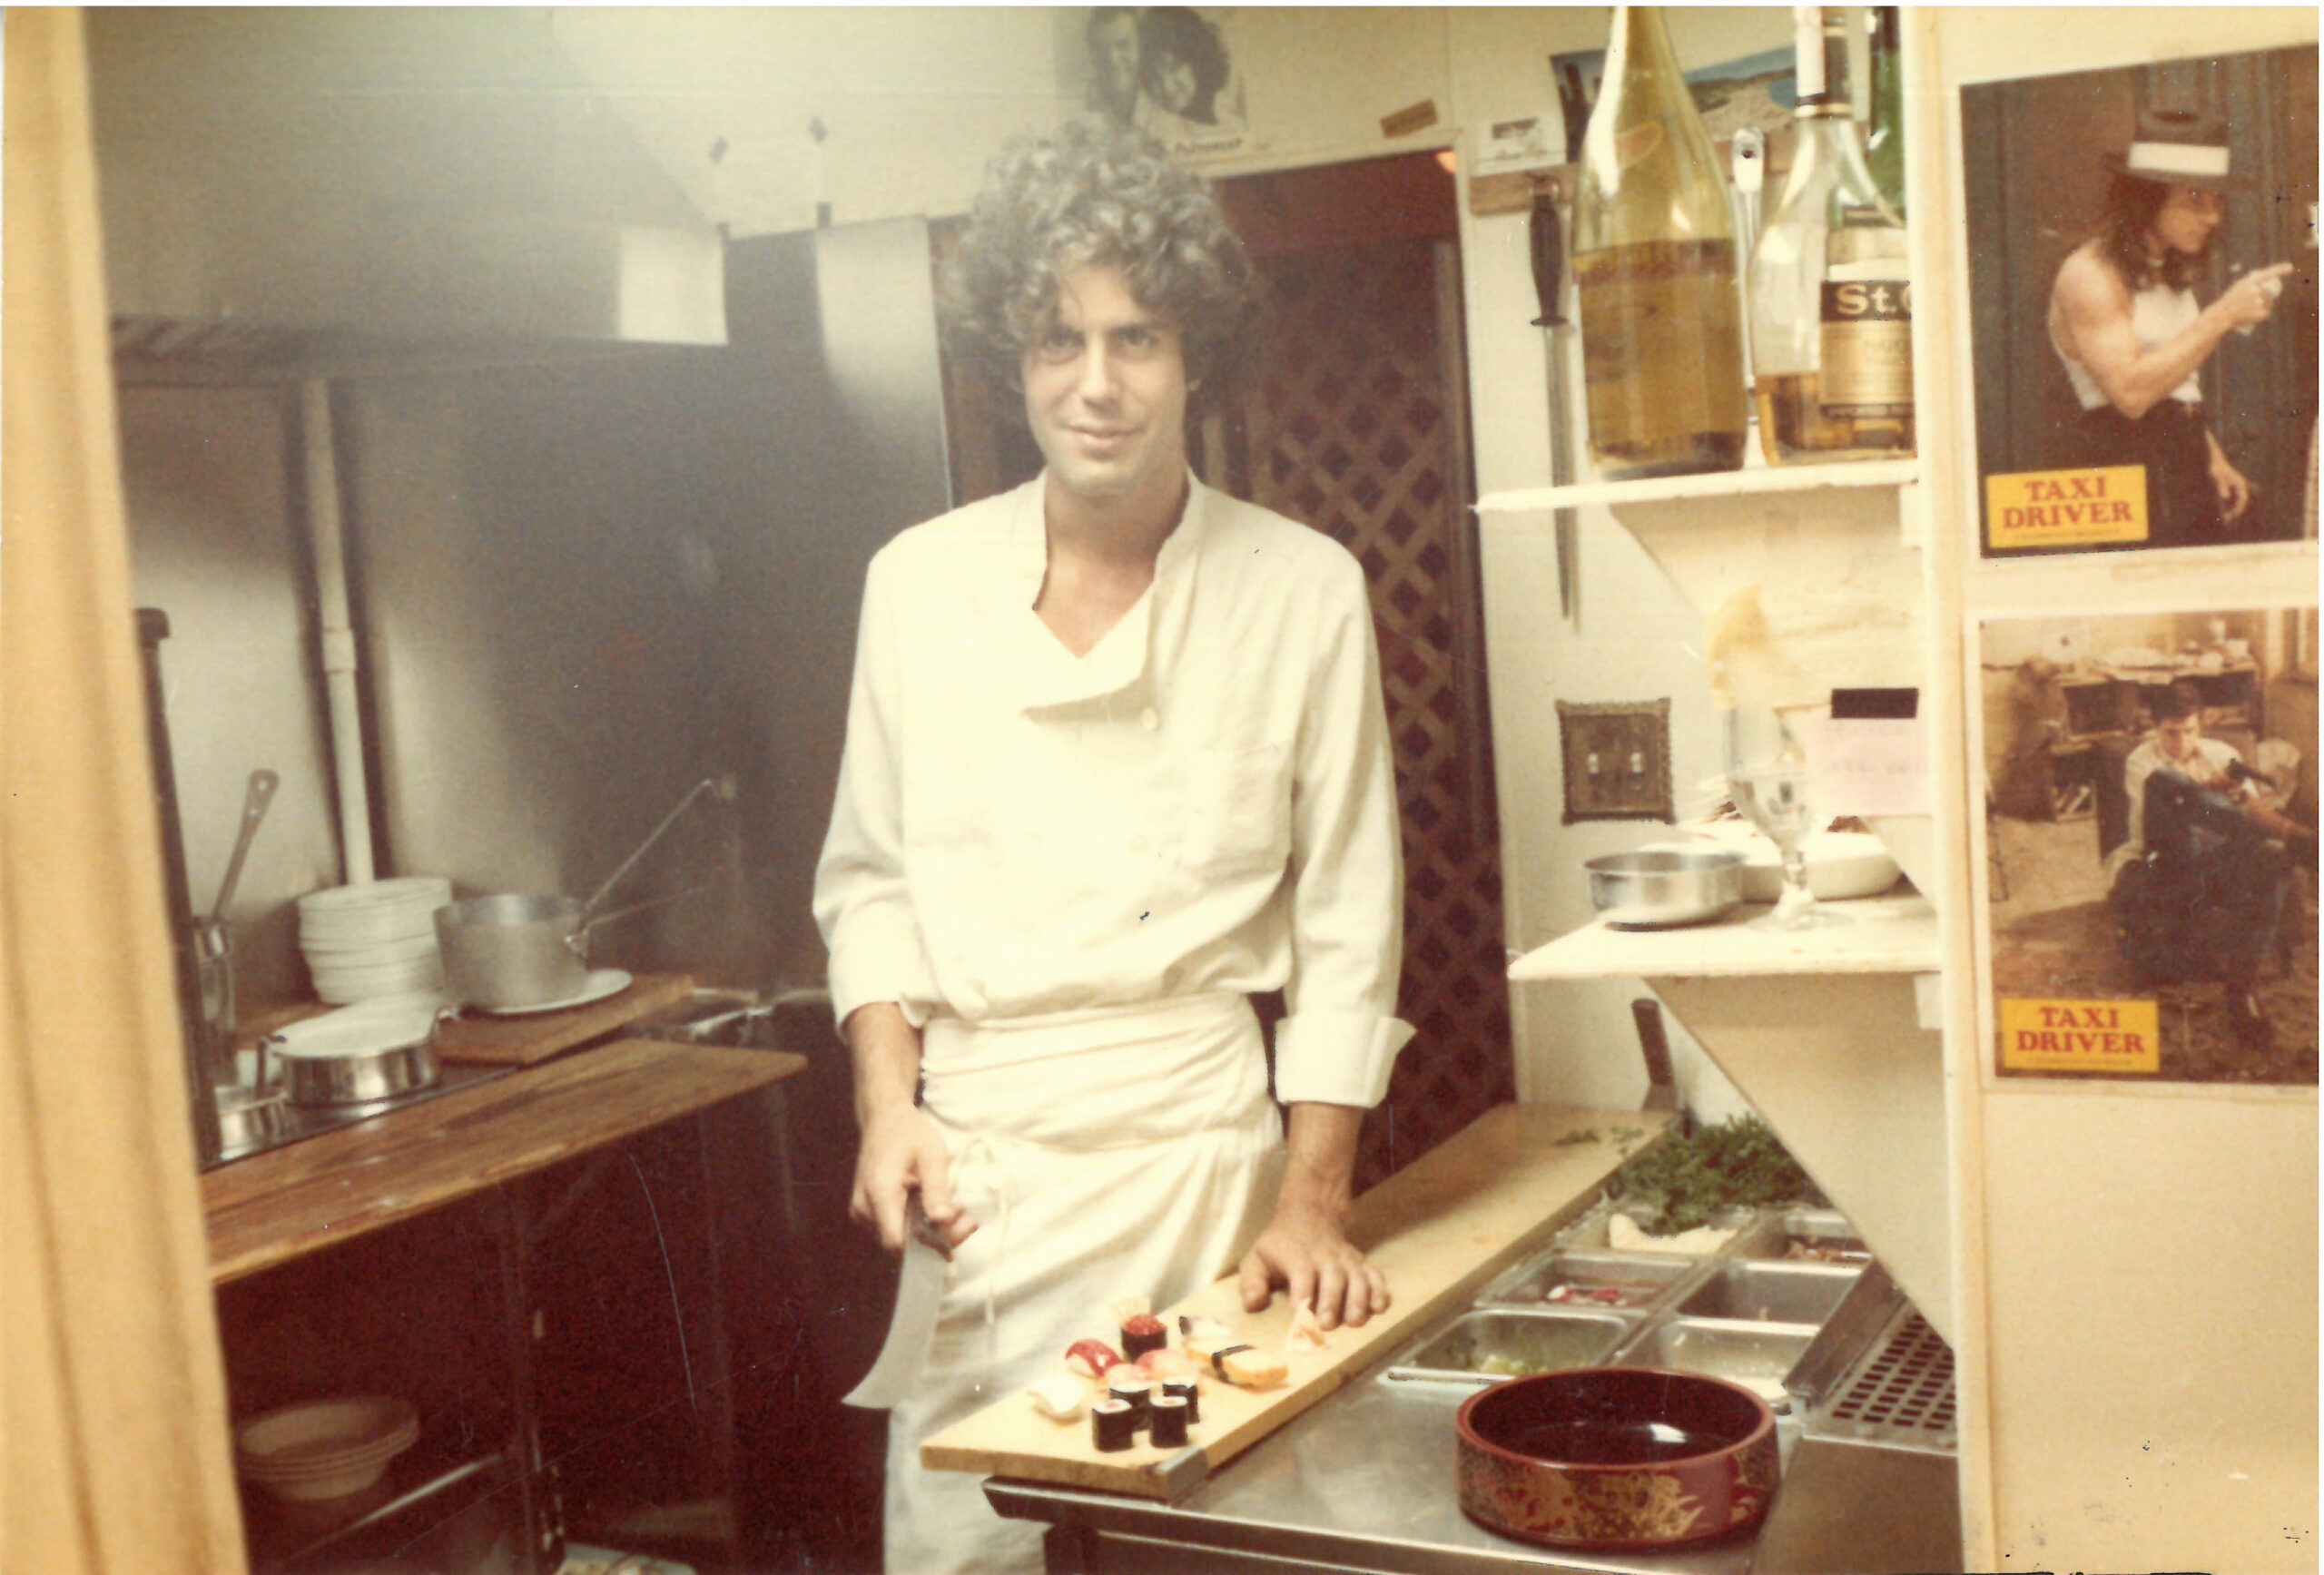 Tony Bourdain in the Hotel Wales kitchen in New York City circa 1988